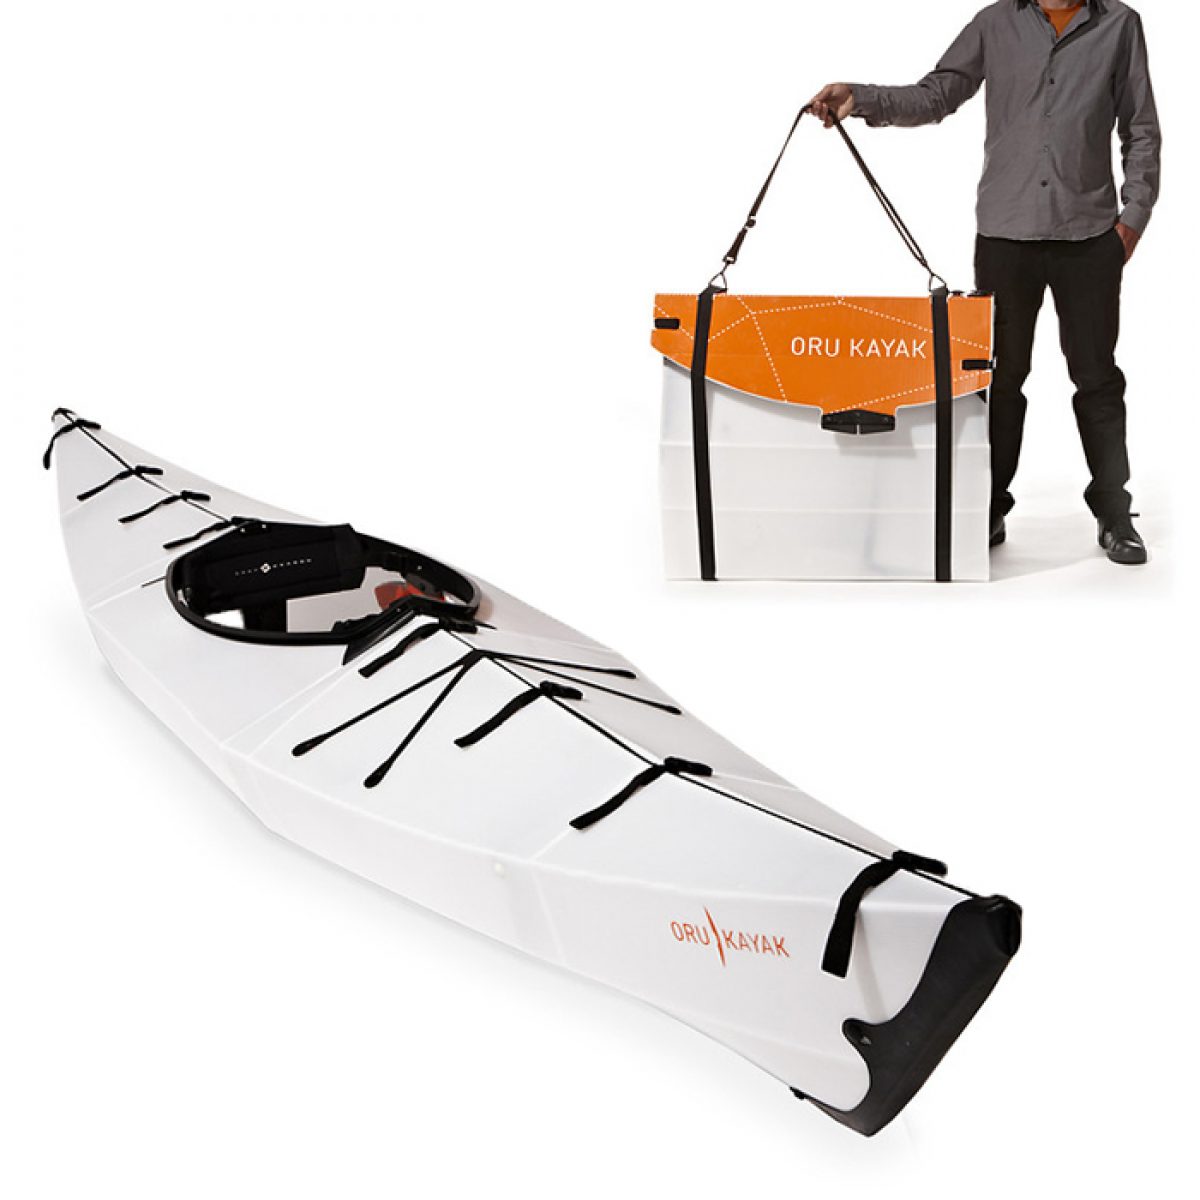 amateur folding kayak builders